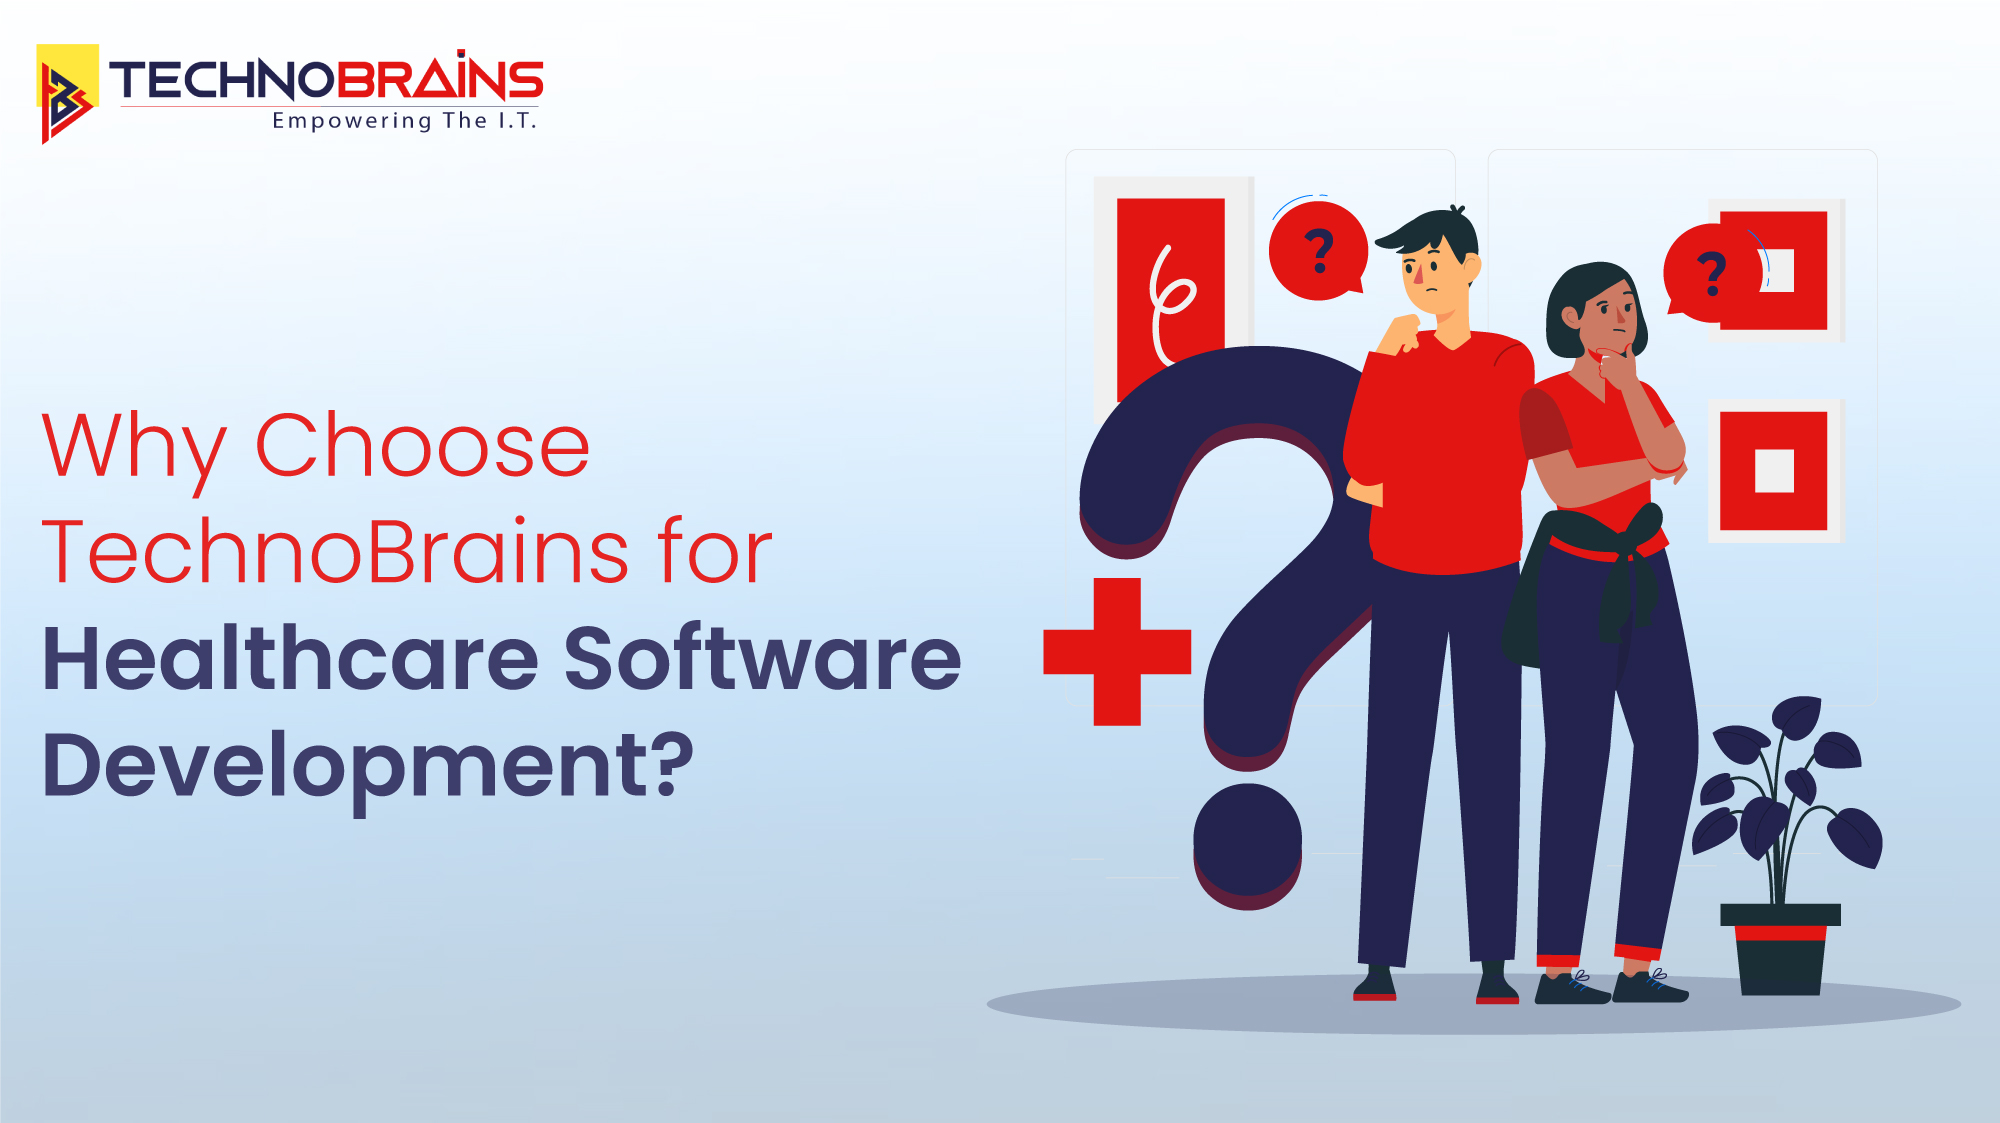 TechnoBrains for Healthcare Software Development